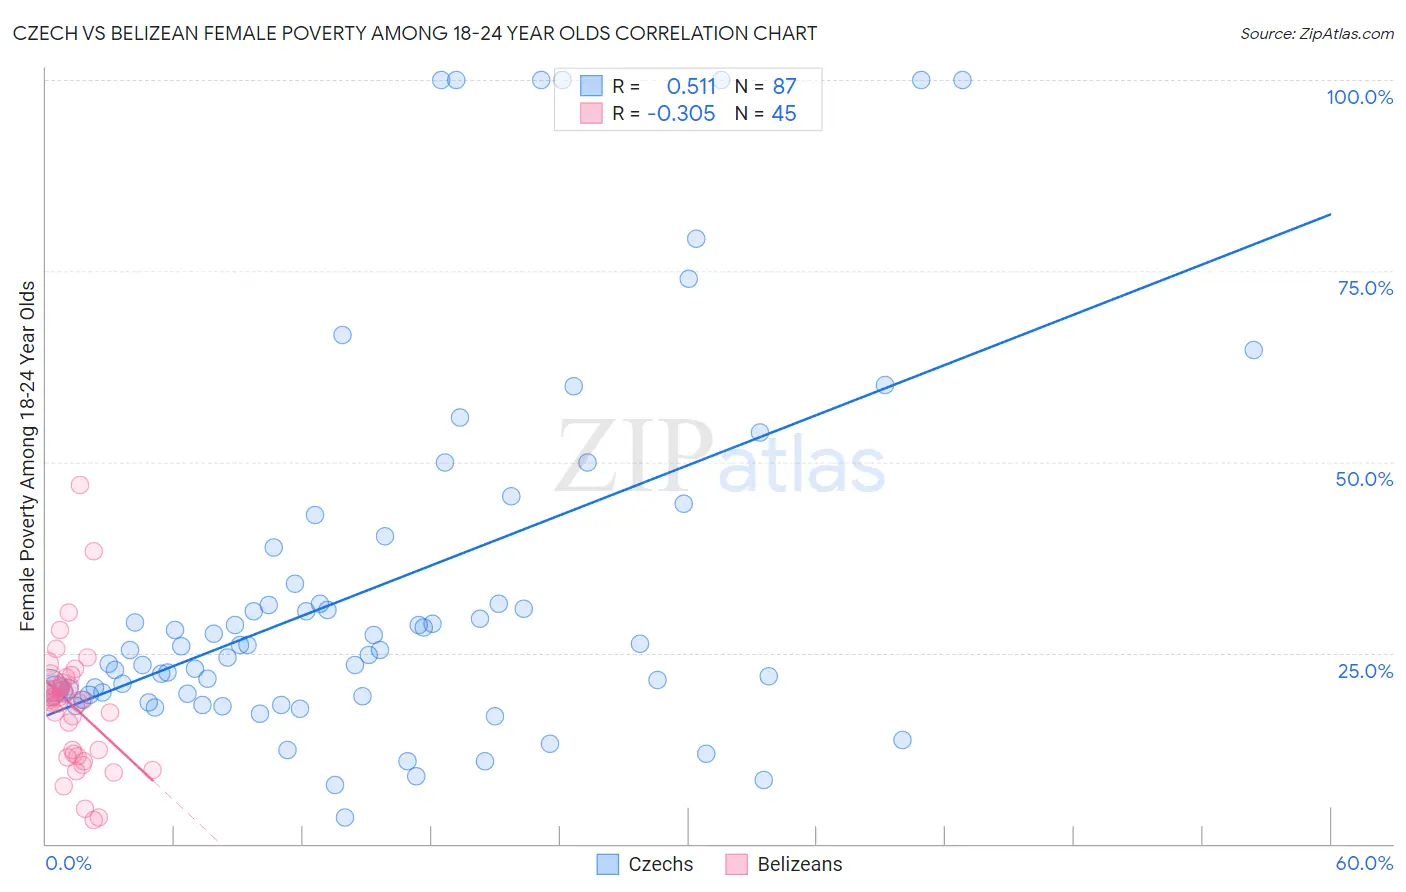 Czech vs Belizean Female Poverty Among 18-24 Year Olds